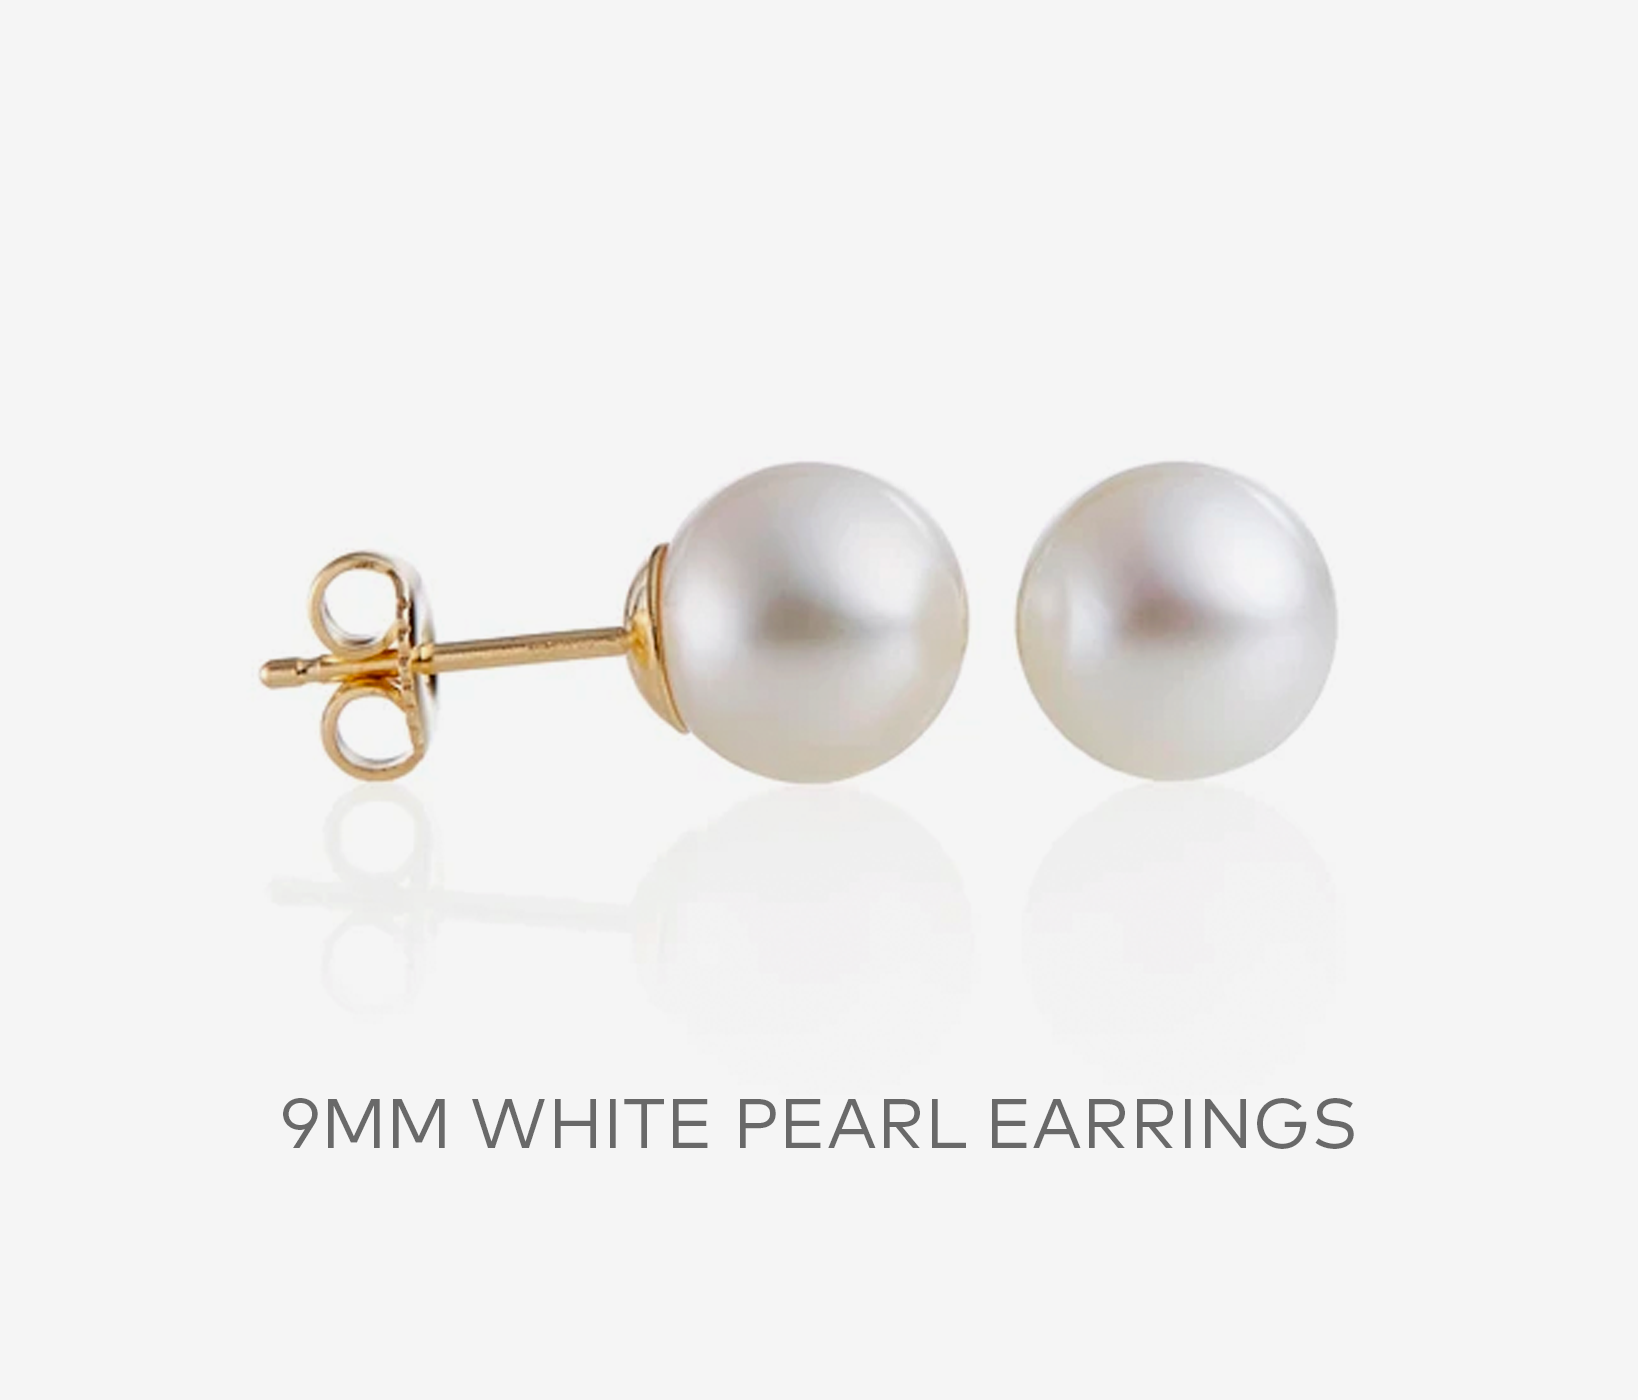 9mm White Pearl Earrings